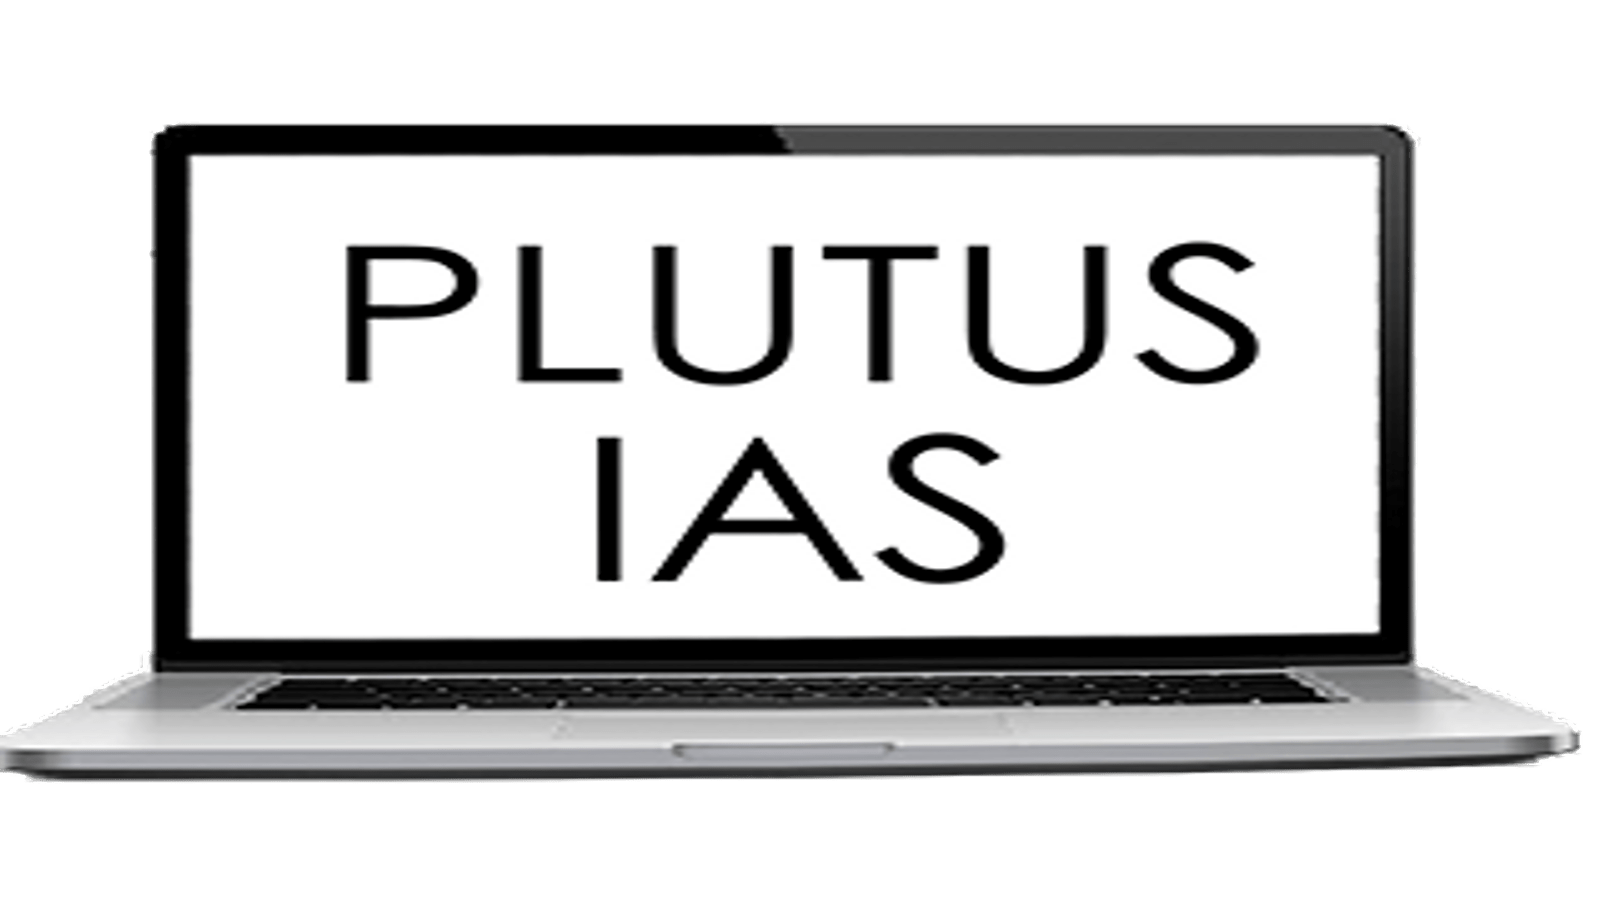 Plutus IAS Online Coaching Patna